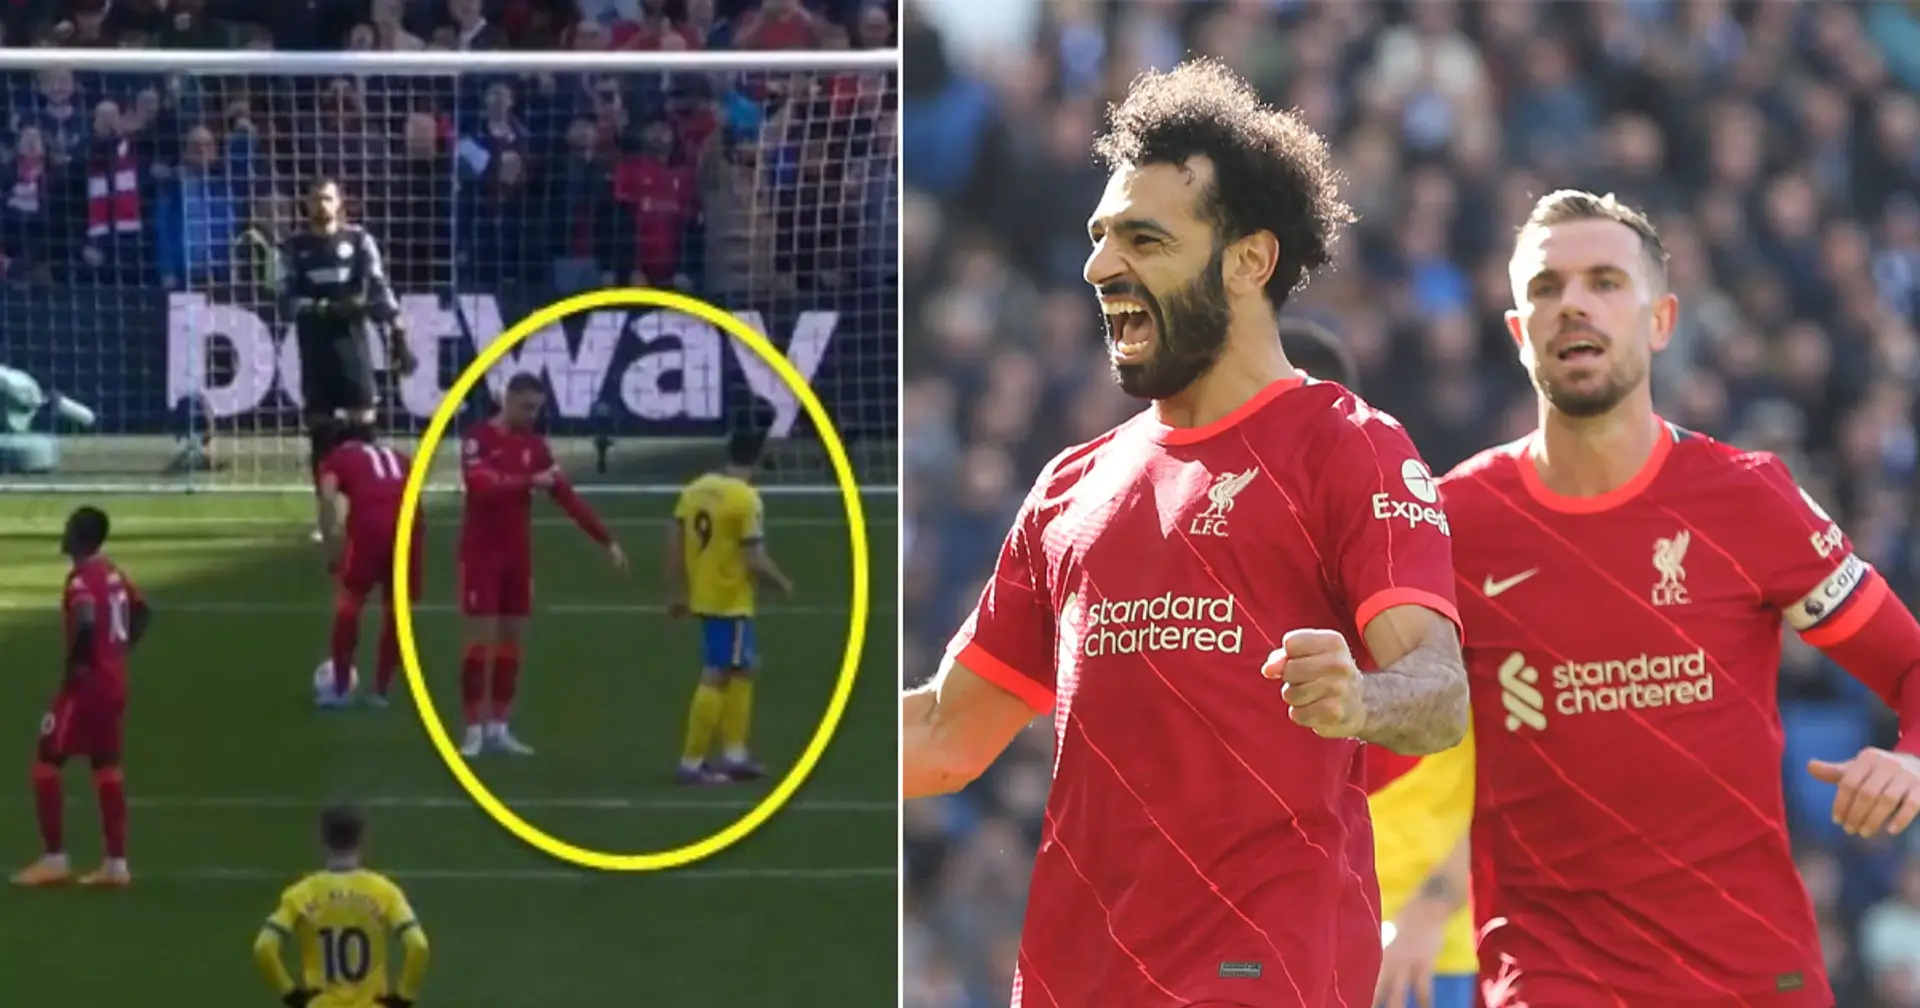 Jordan Henderson's unnoticed role in Mohamed Salah's penalty goal - spotted